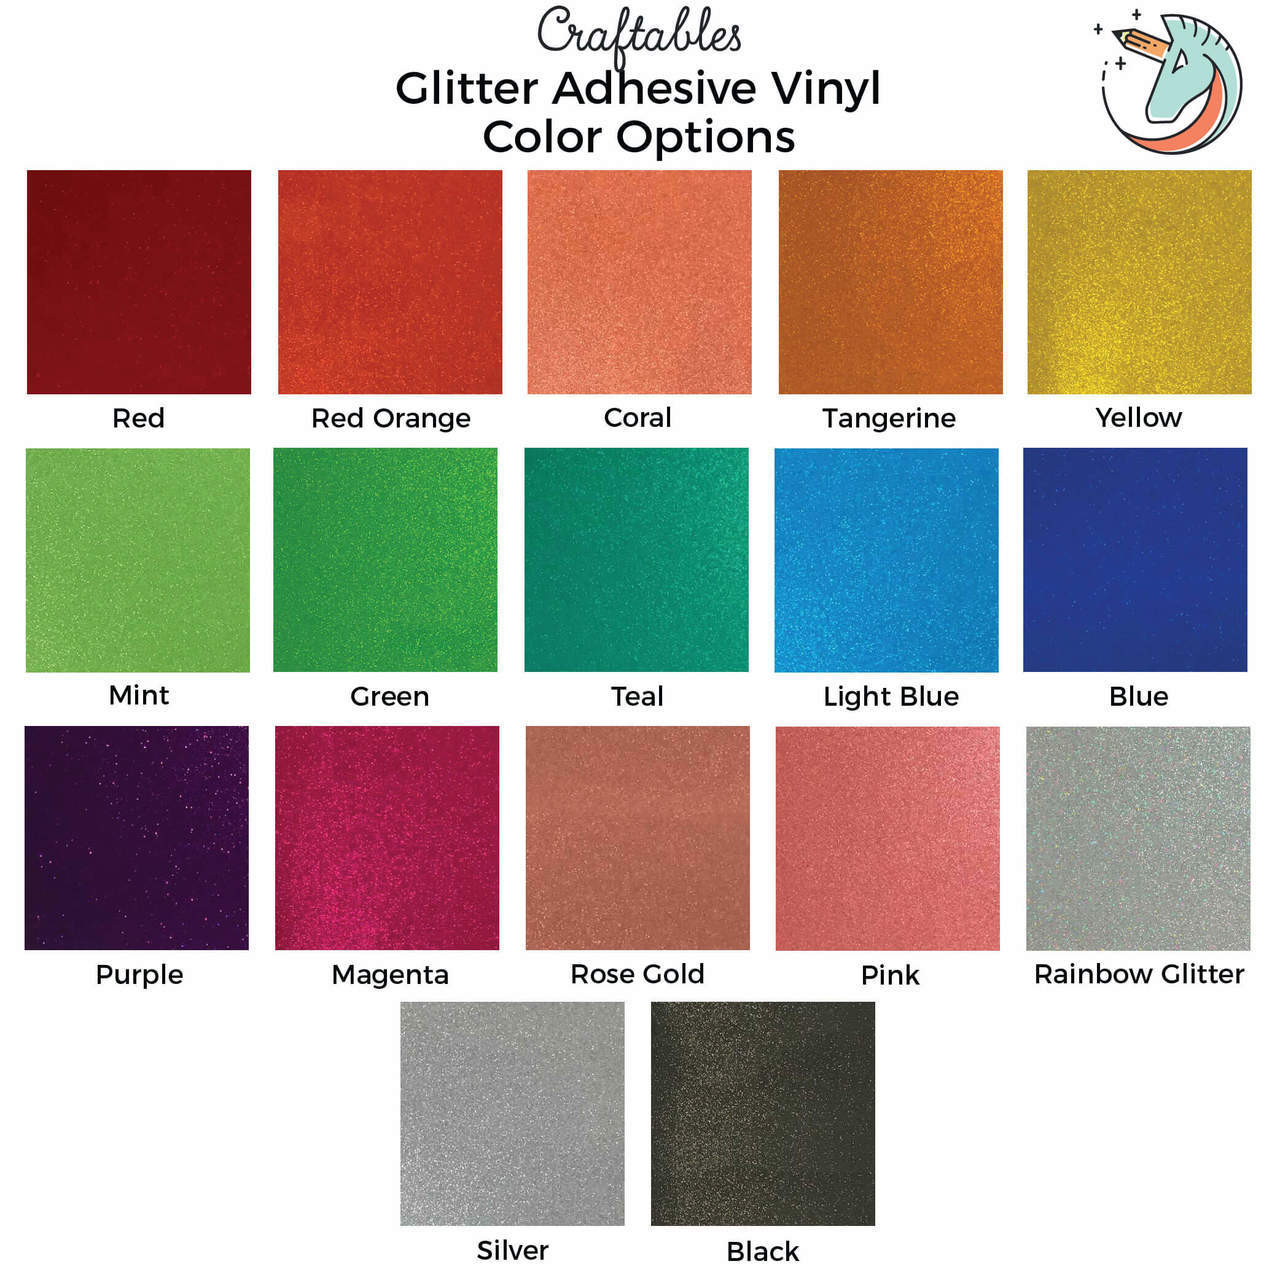 Light Pink Glitter Adhesive Vinyl Rolls By Craftables